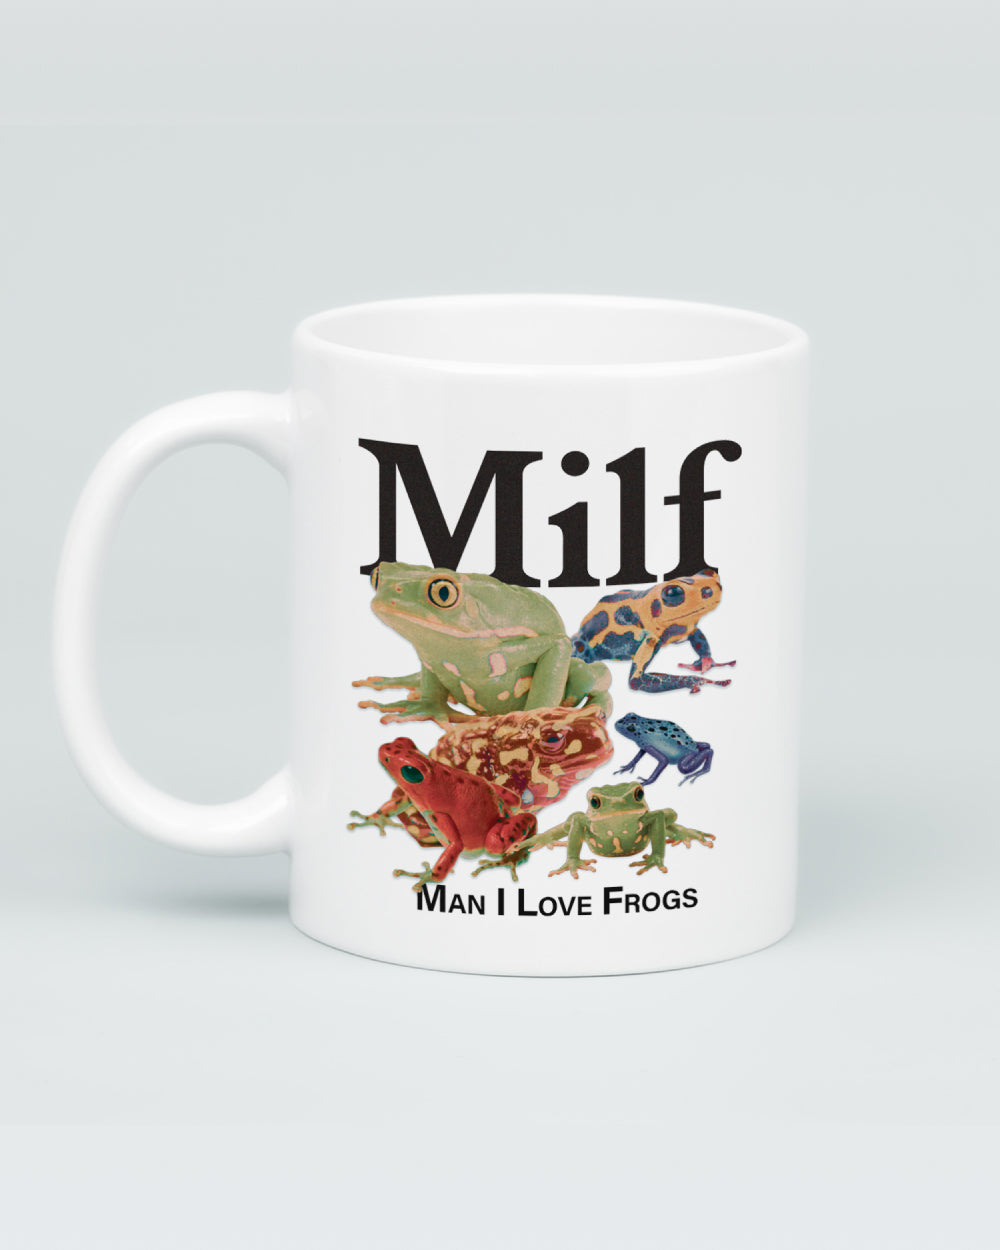 Man I Love Frogs Mug